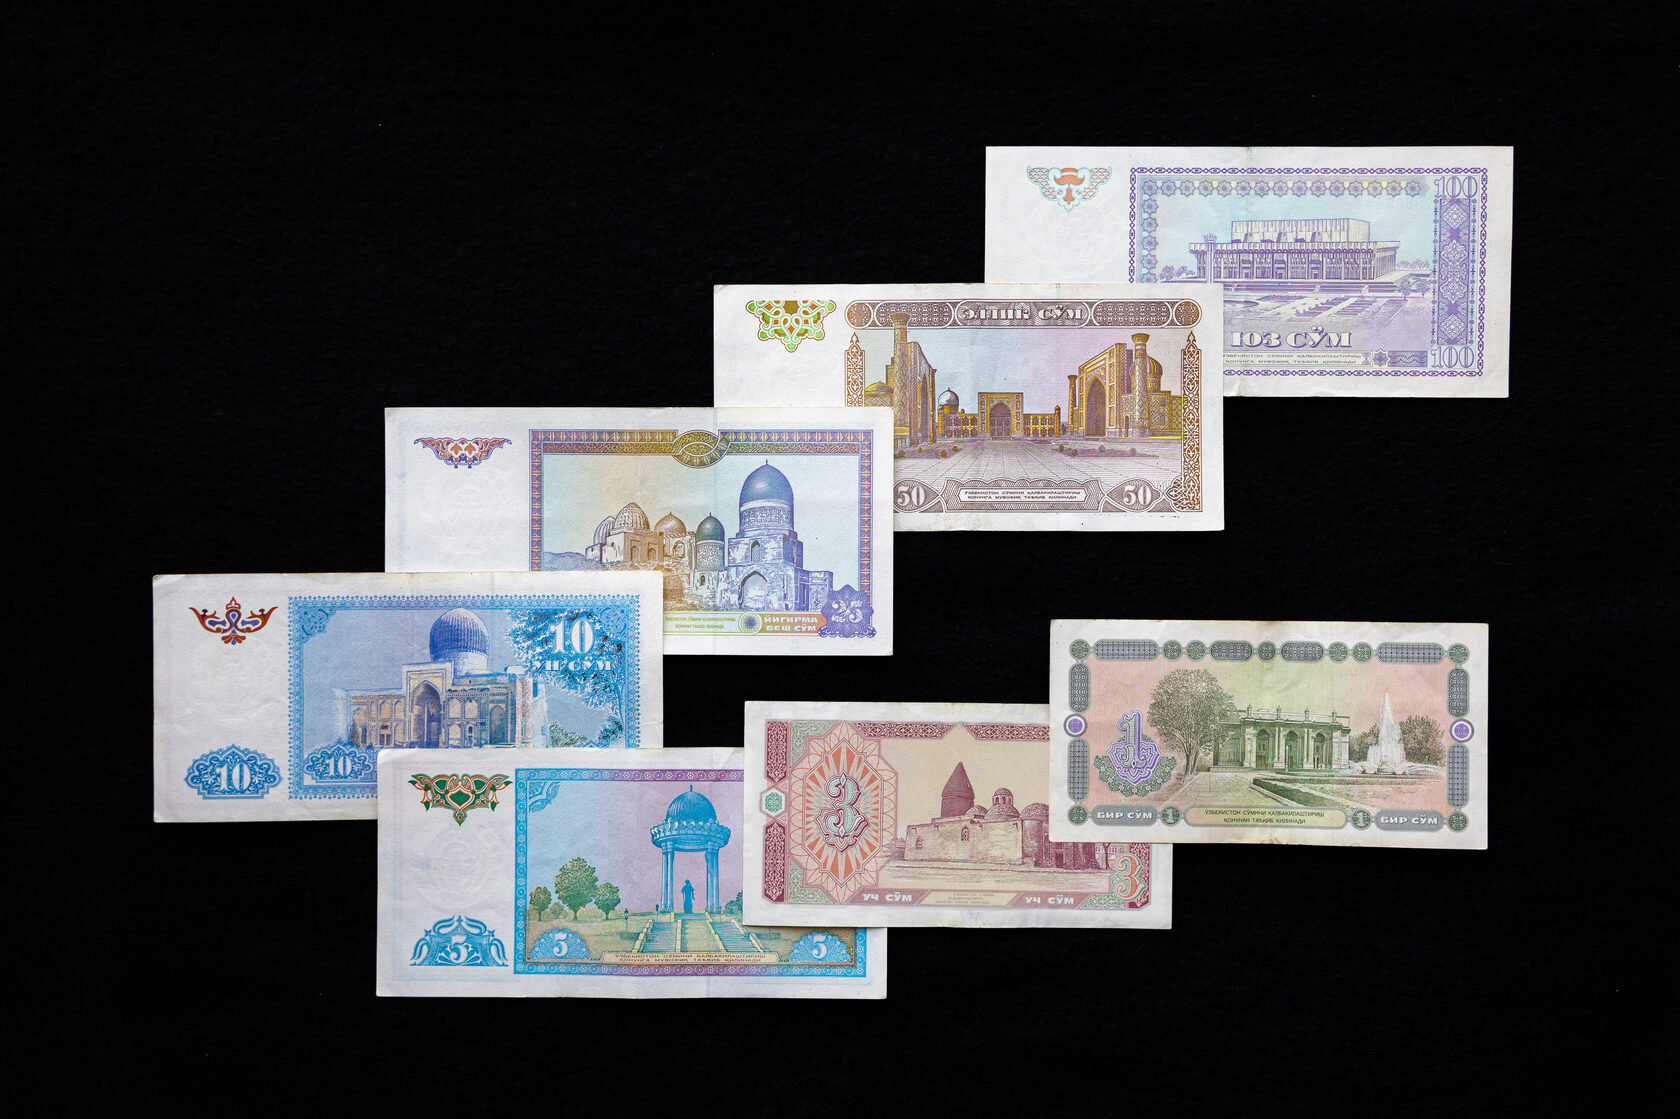 Узбекистан валюта сум. 2000 Узбекских сум. Узбекский сум банкноты в обращении. Нац валюта Узбекистана. 500 Сум Узбекистан.